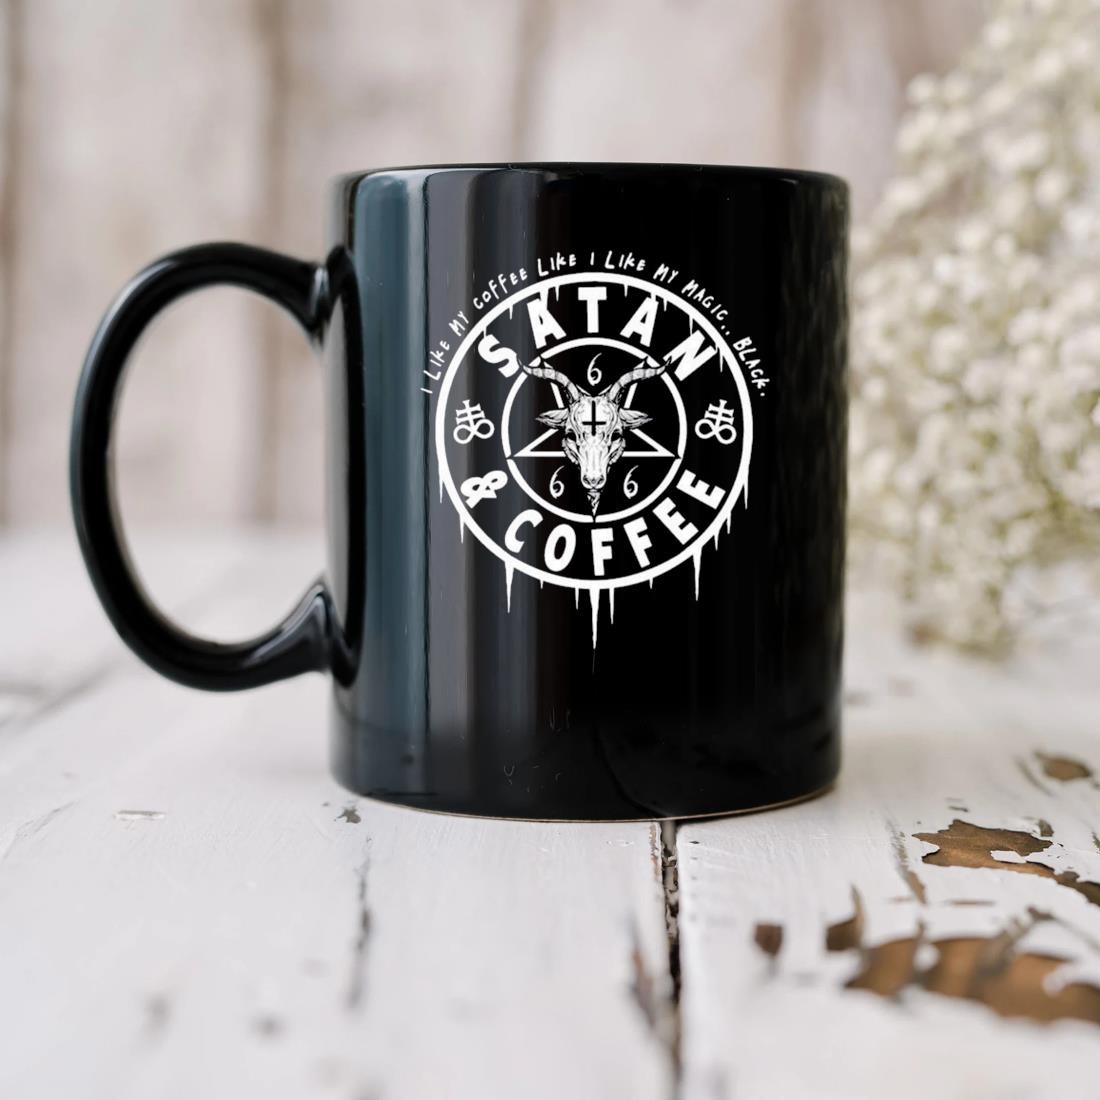 Satan And Coffee Funny Satanic Occult Mug biu.jpg